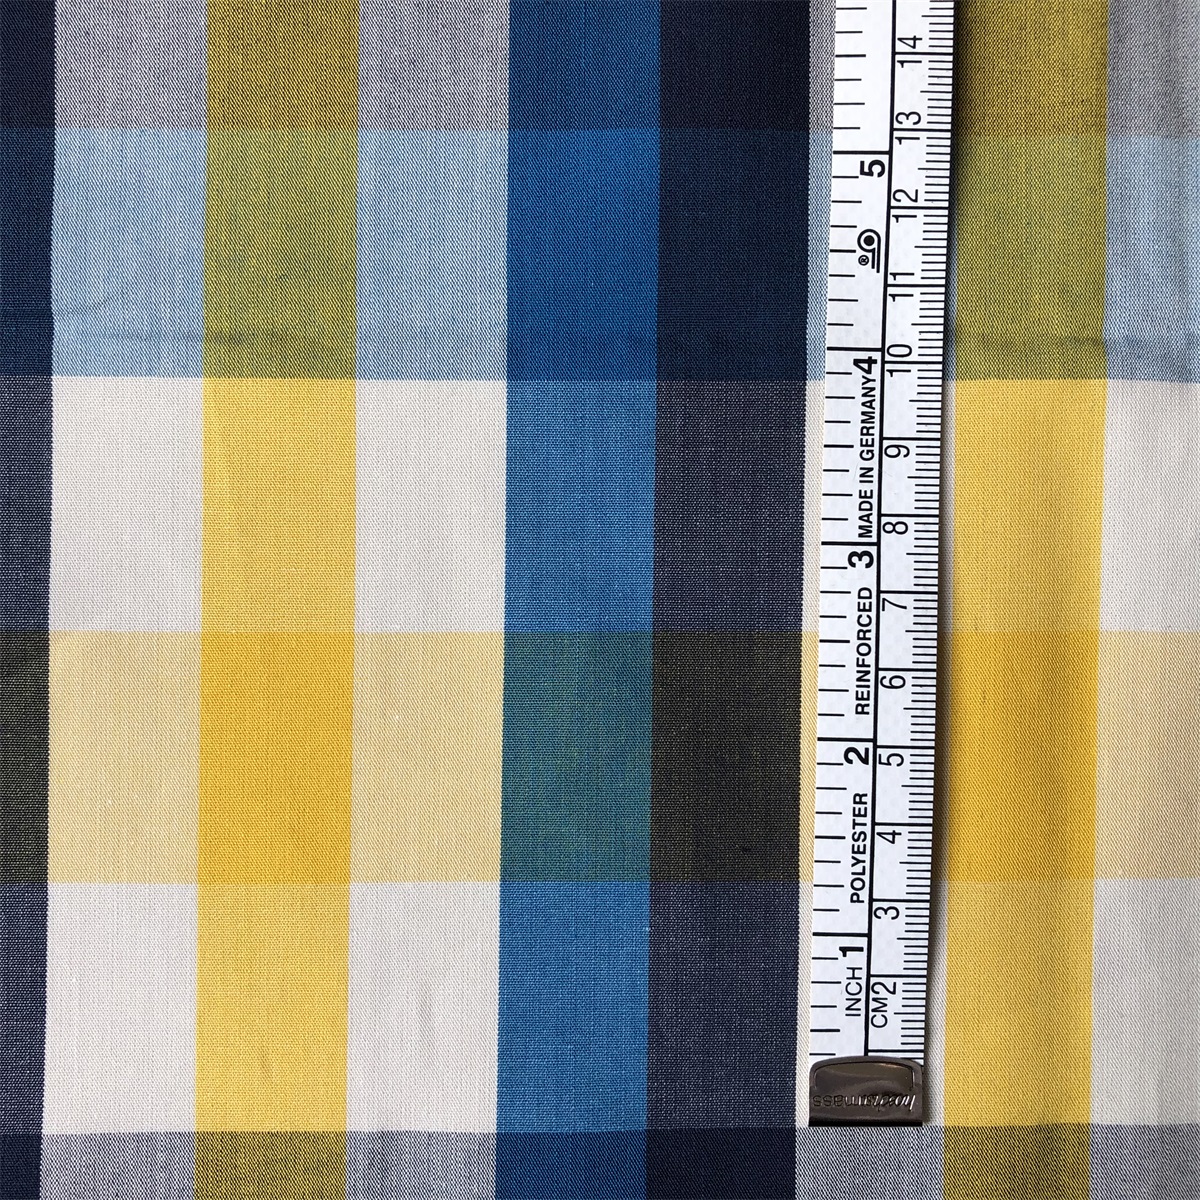 Cotton Yarn Dyed Fabric by compact yarn 100% cotton yarn dyed poplin plain check shirts woven fabric for men's casual shirts